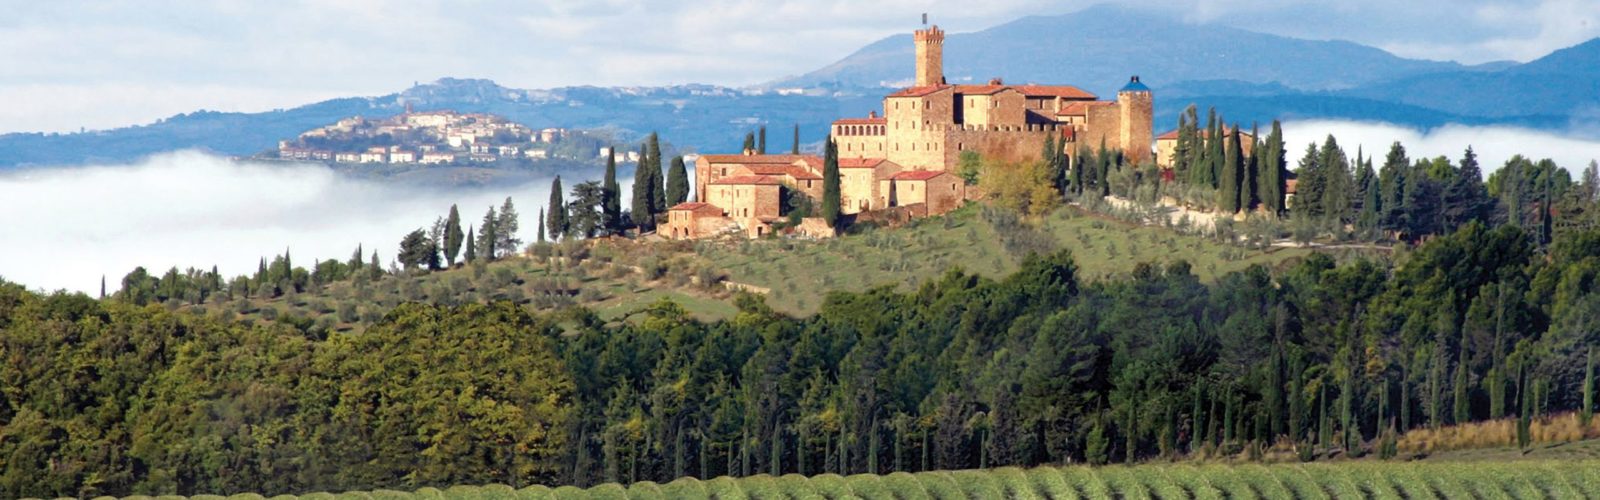 Castello Banfi Il Borgo - Luxury Hotel In Tuscany | Jacada Travel
